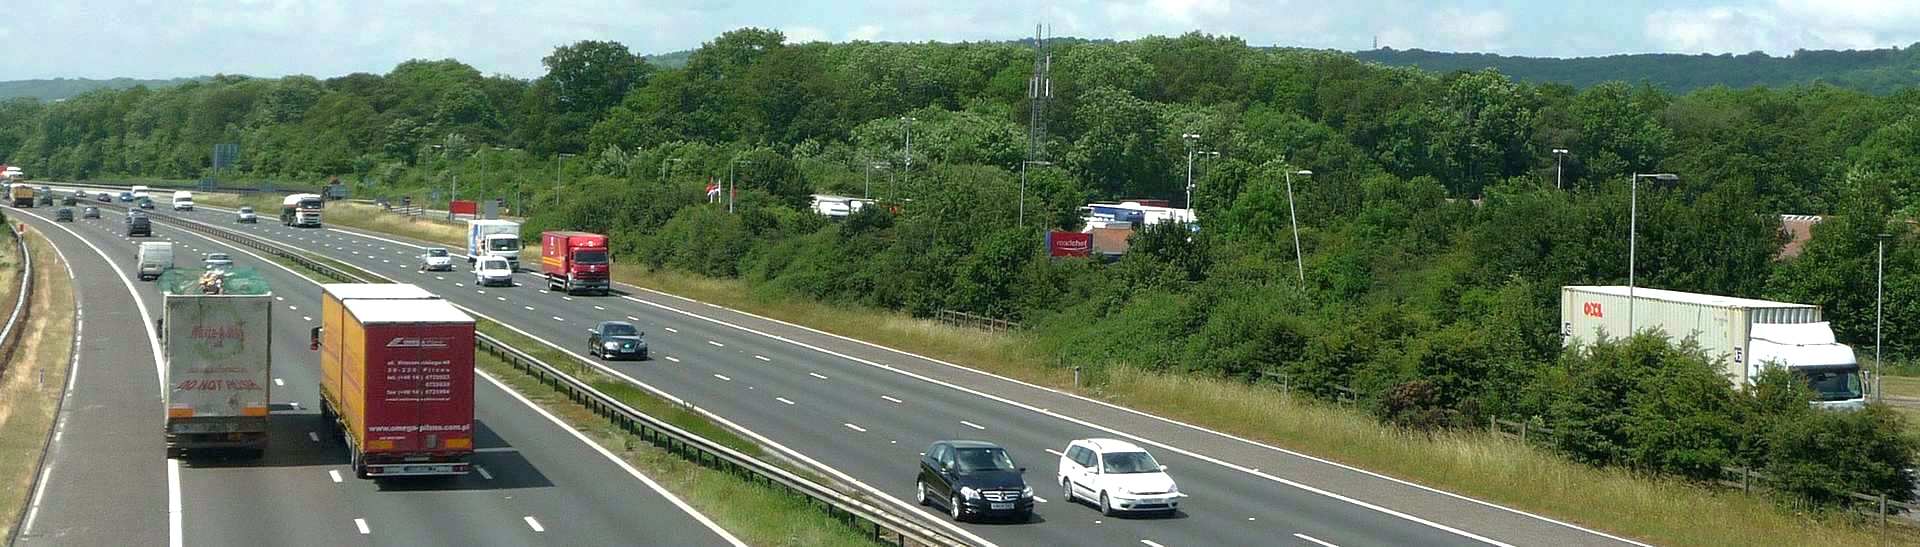 Traffic on Surrey motorway